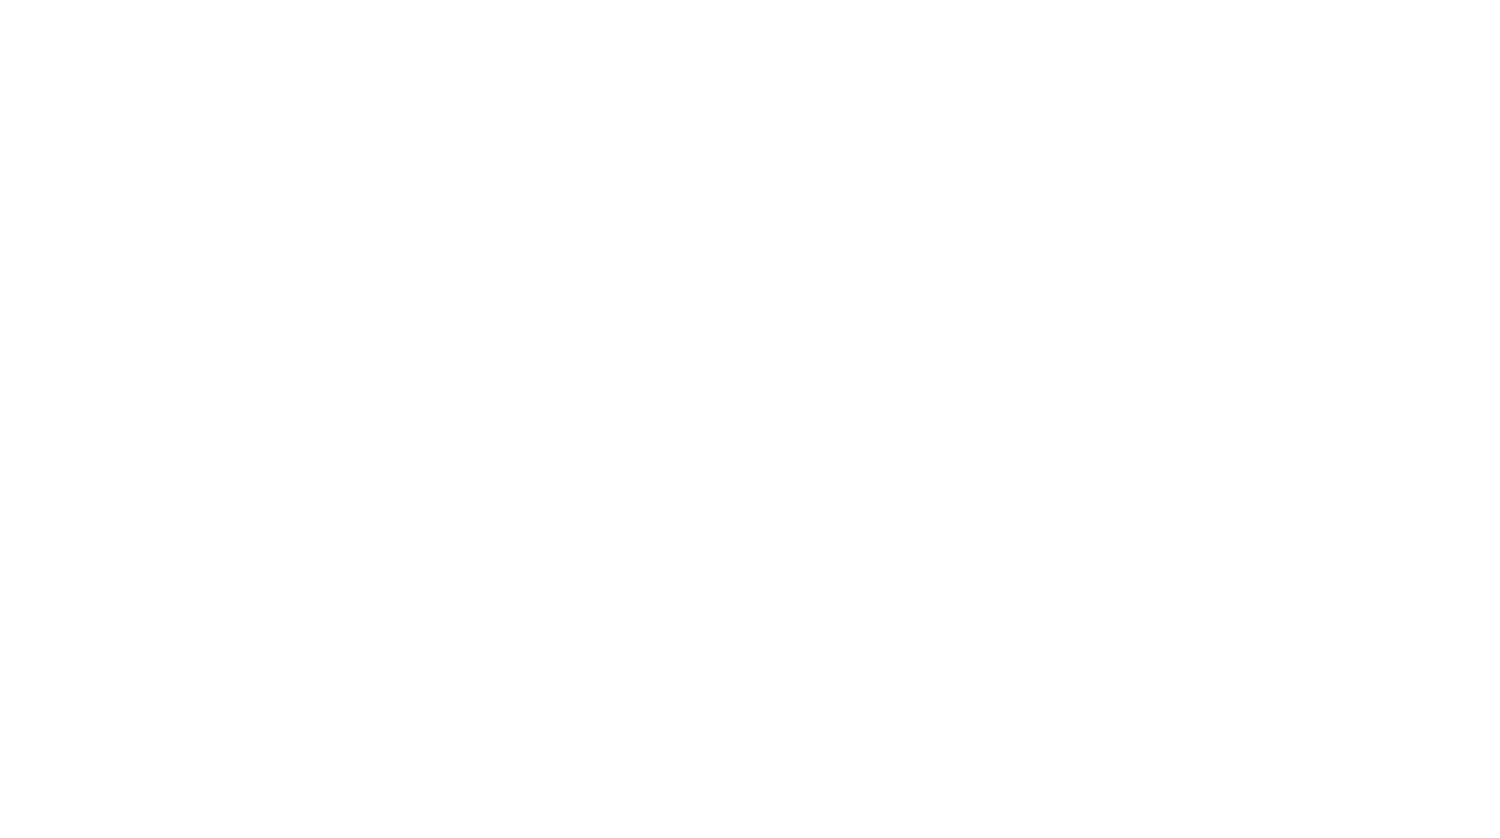 Clemson PSA